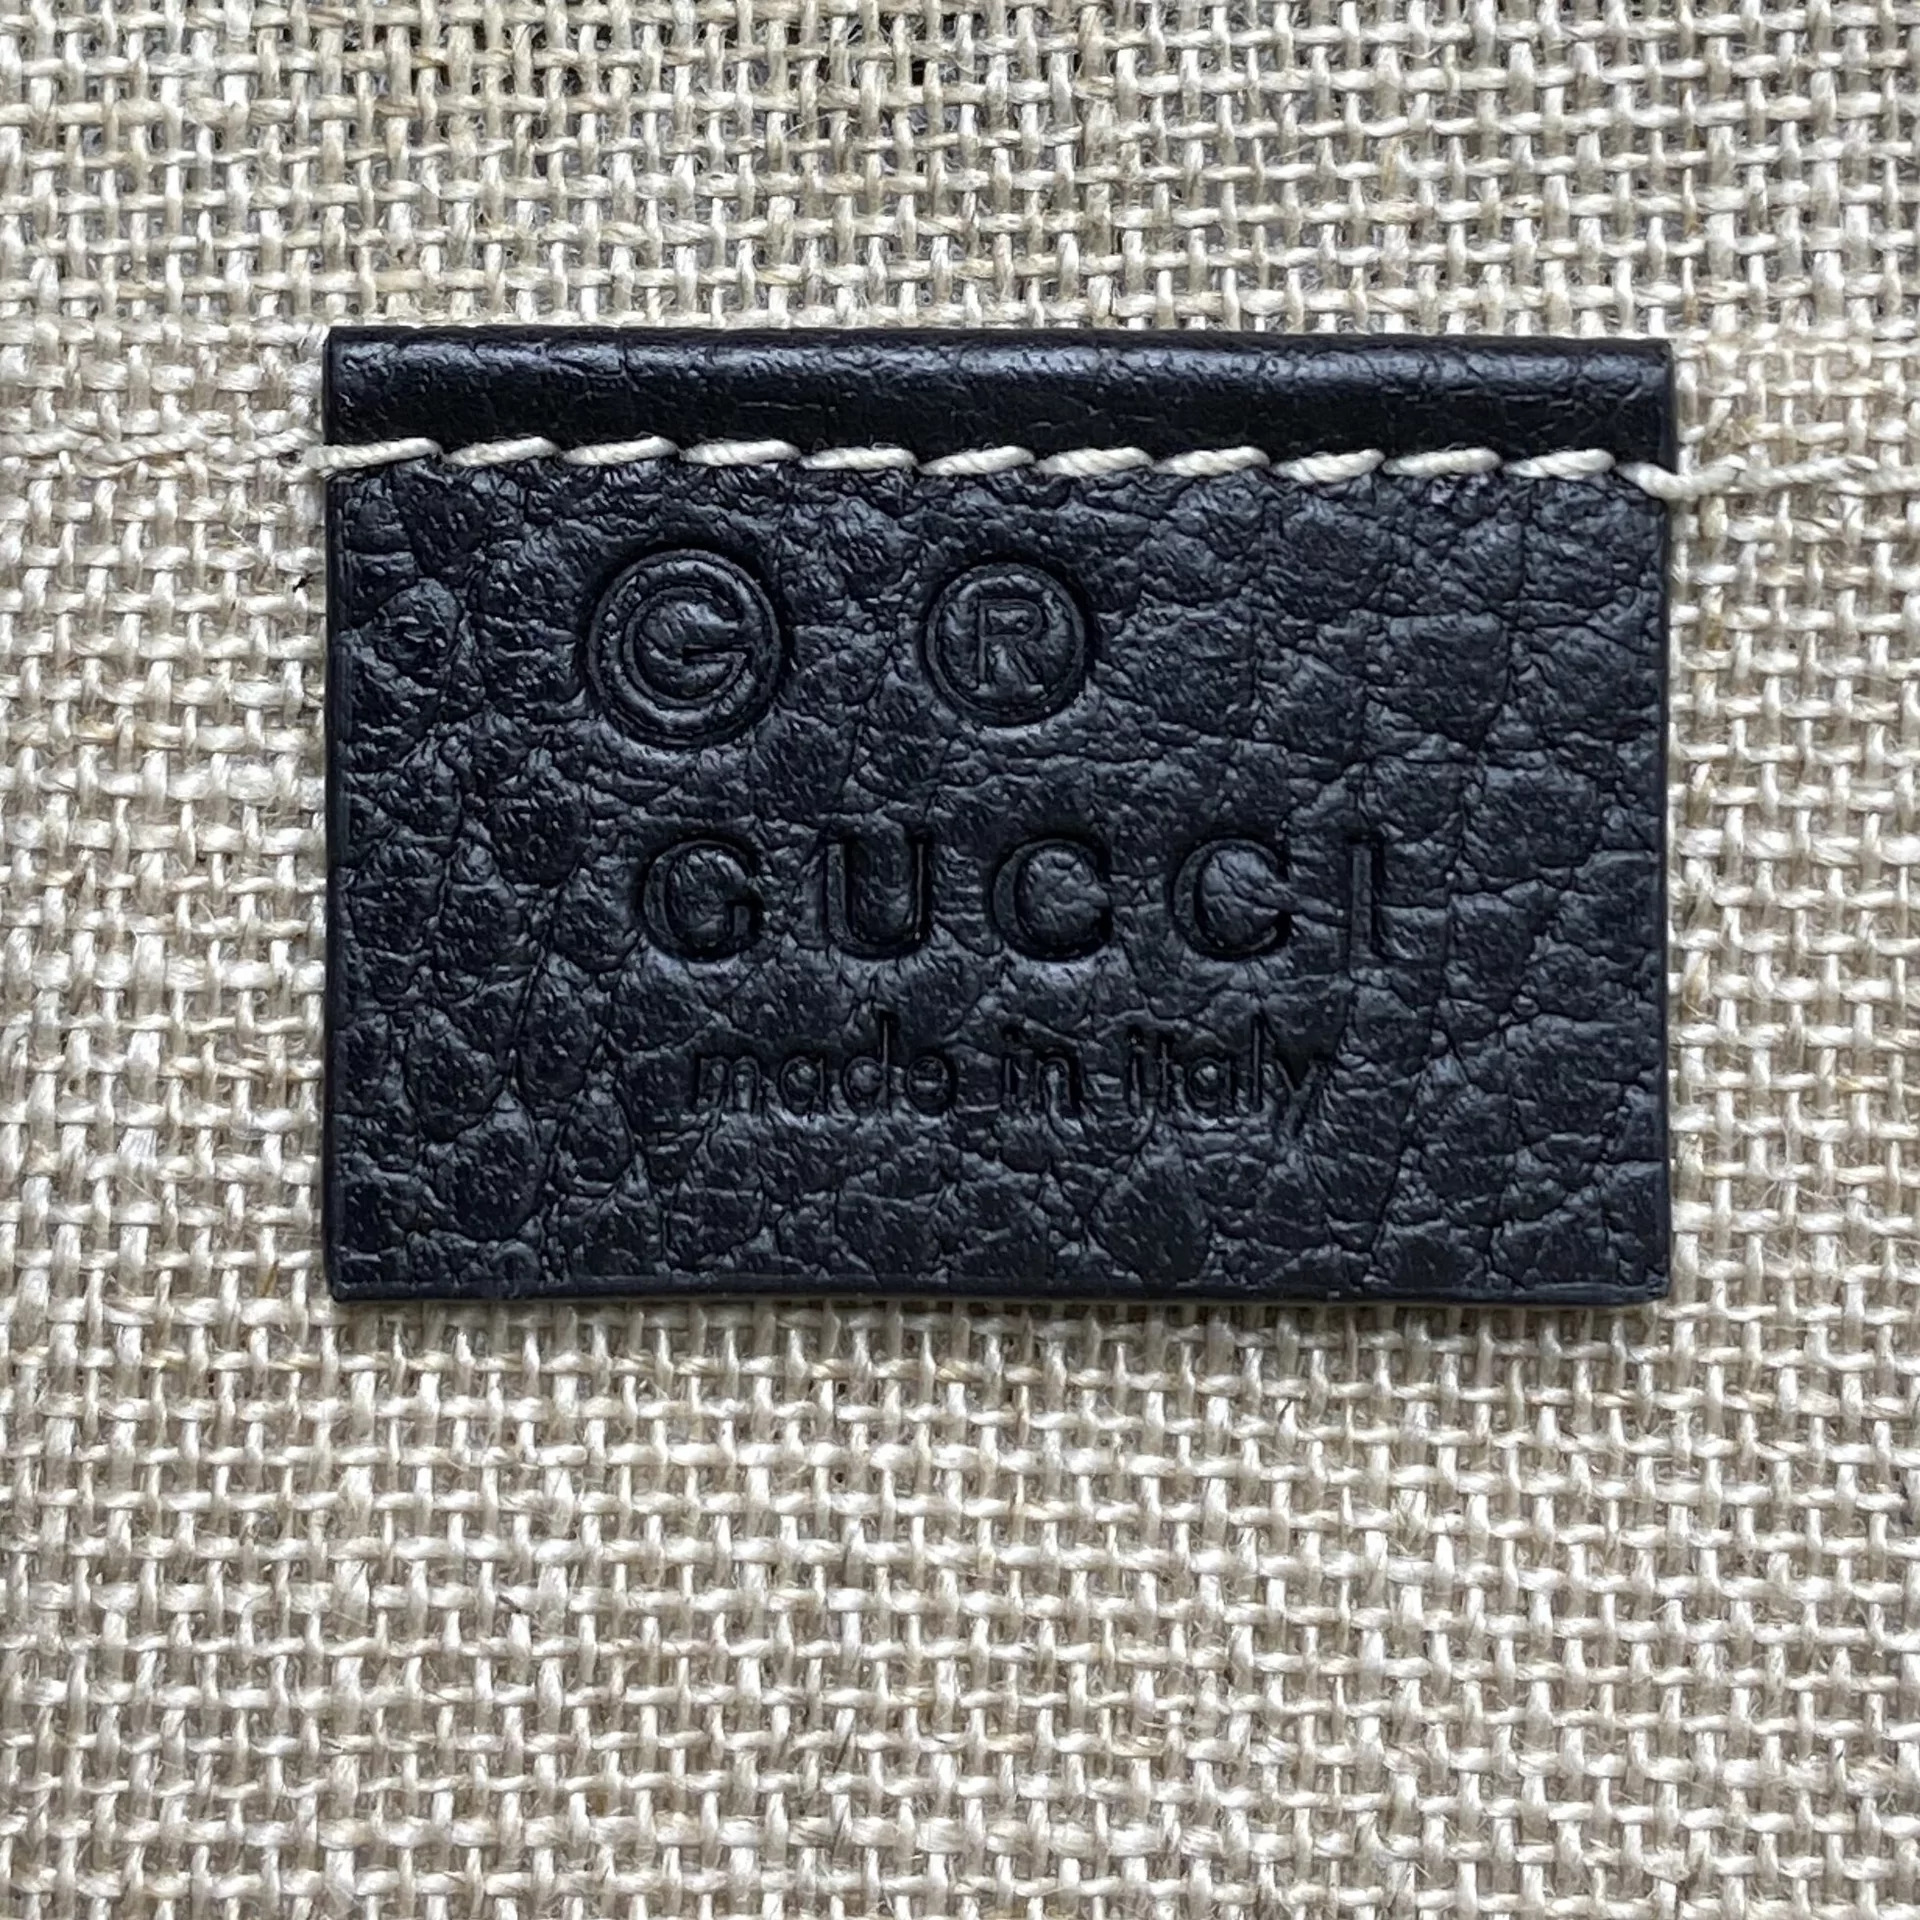 Bolsa Gucci Interlocking G Preta